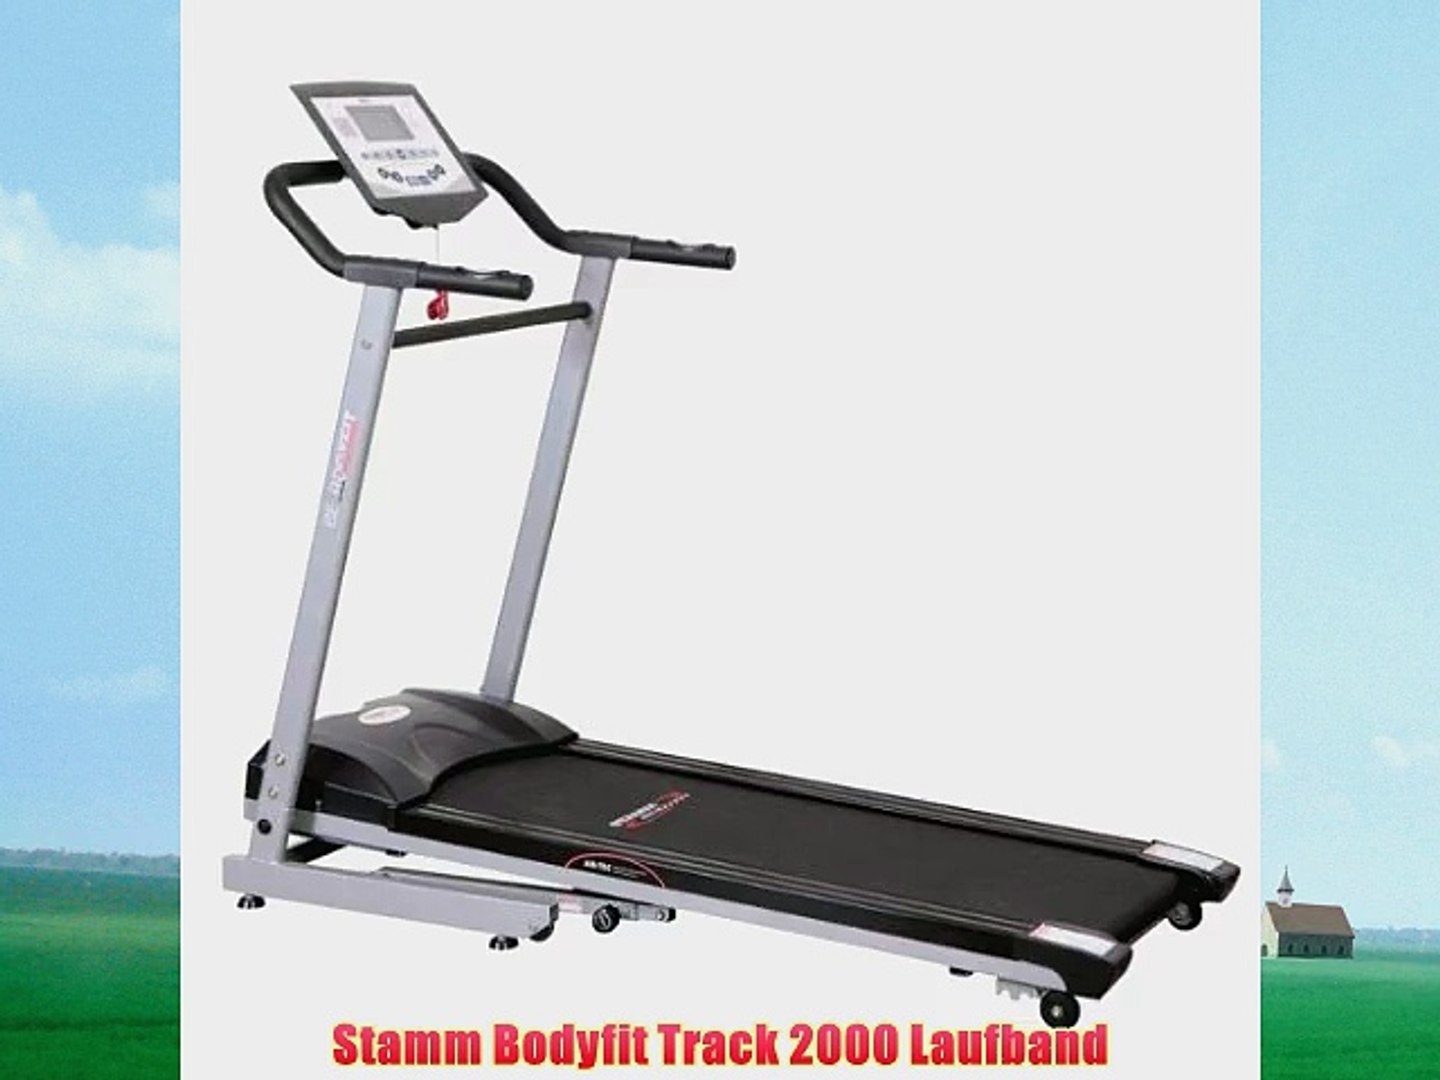 Stamm Bodyfit Track 2000 Laufband - video Dailymotion